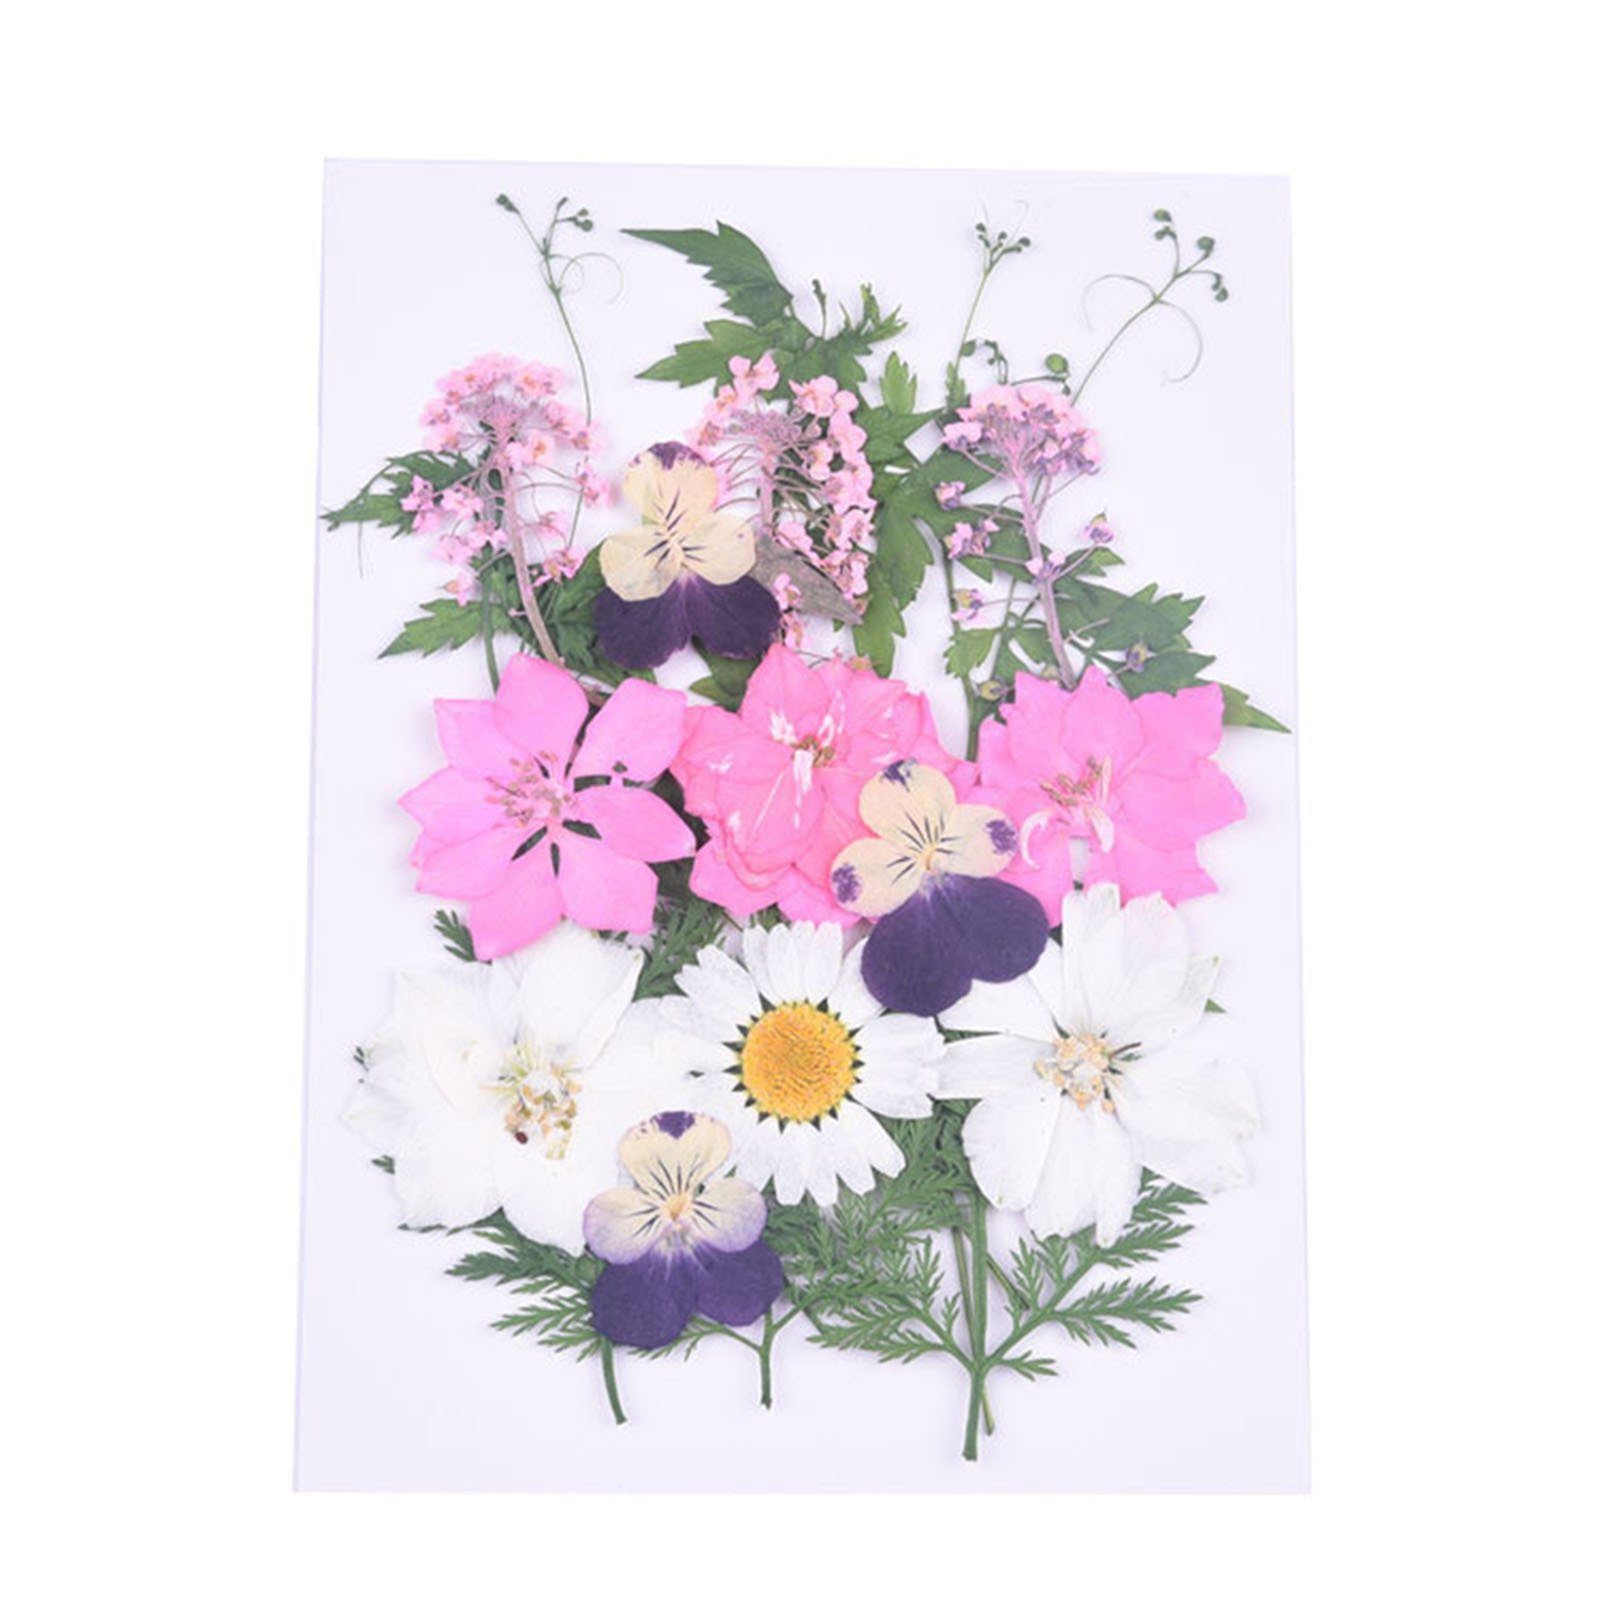 Trockenblume Gepresste Blumen, Kleine Blumen, Trockene, Scrapbooking, 5 Blusmart Getrocknete combination